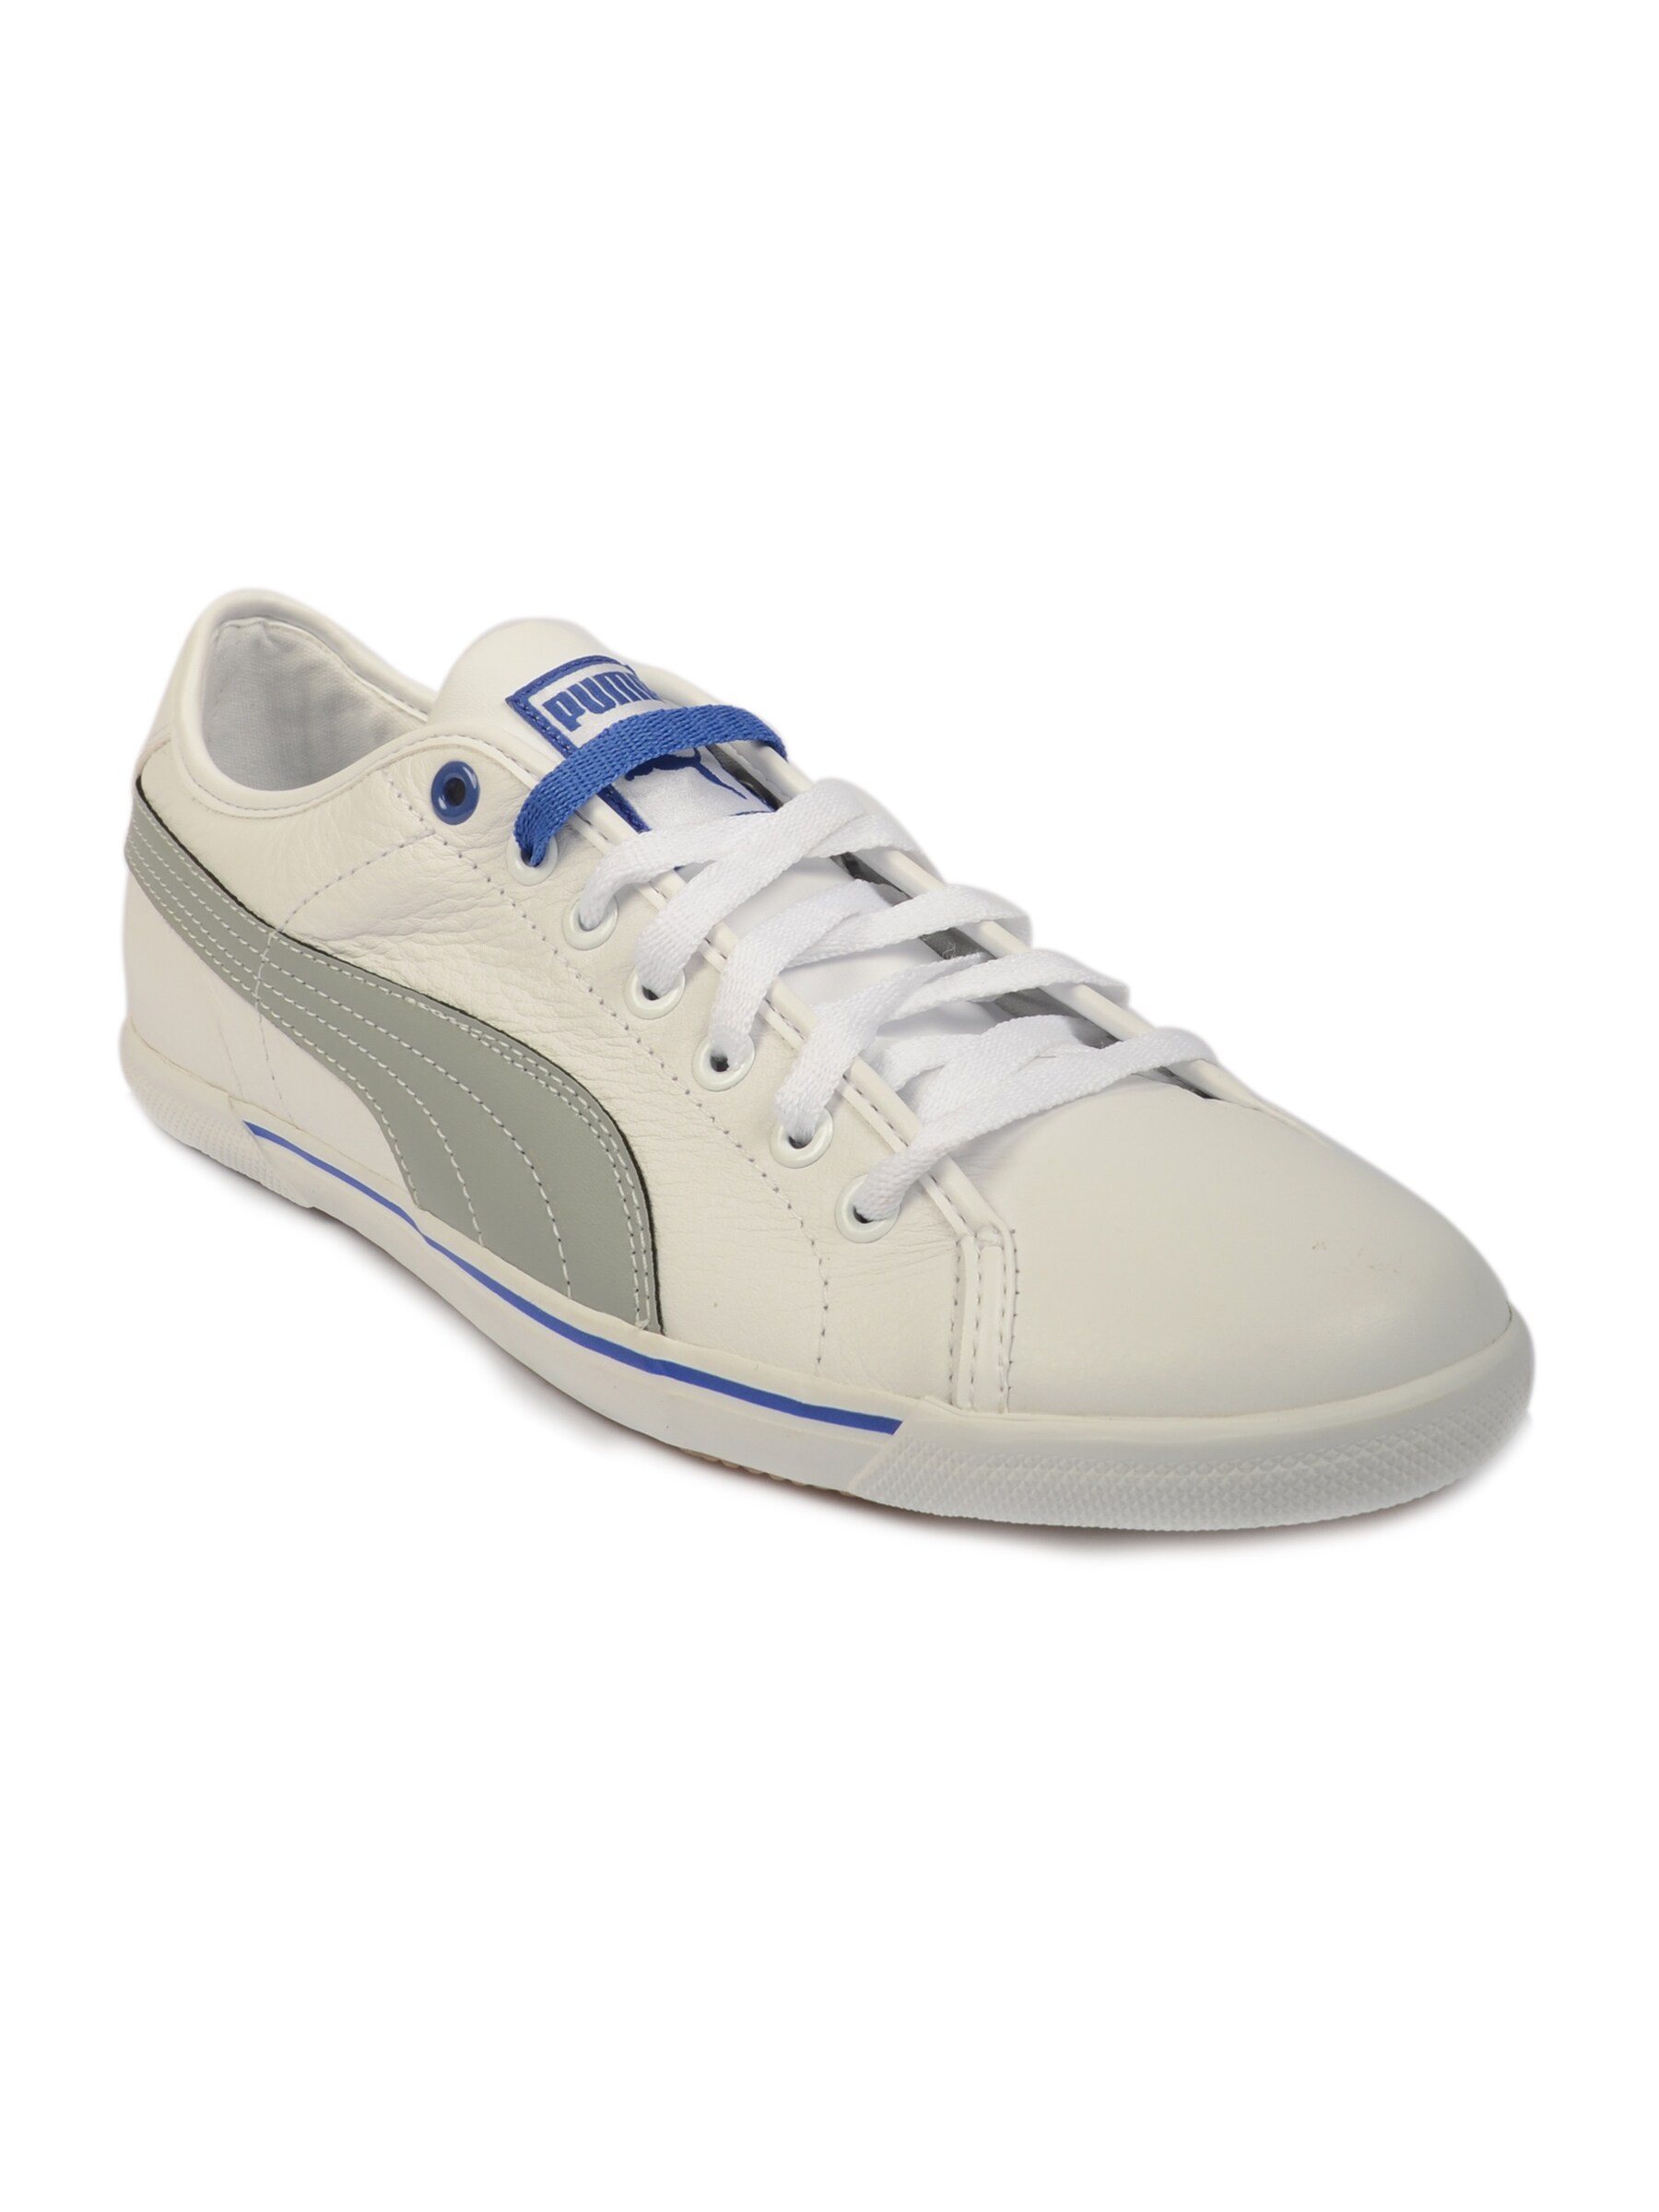 Puma Unisex Benecio Leather Drip White Casual Shoes